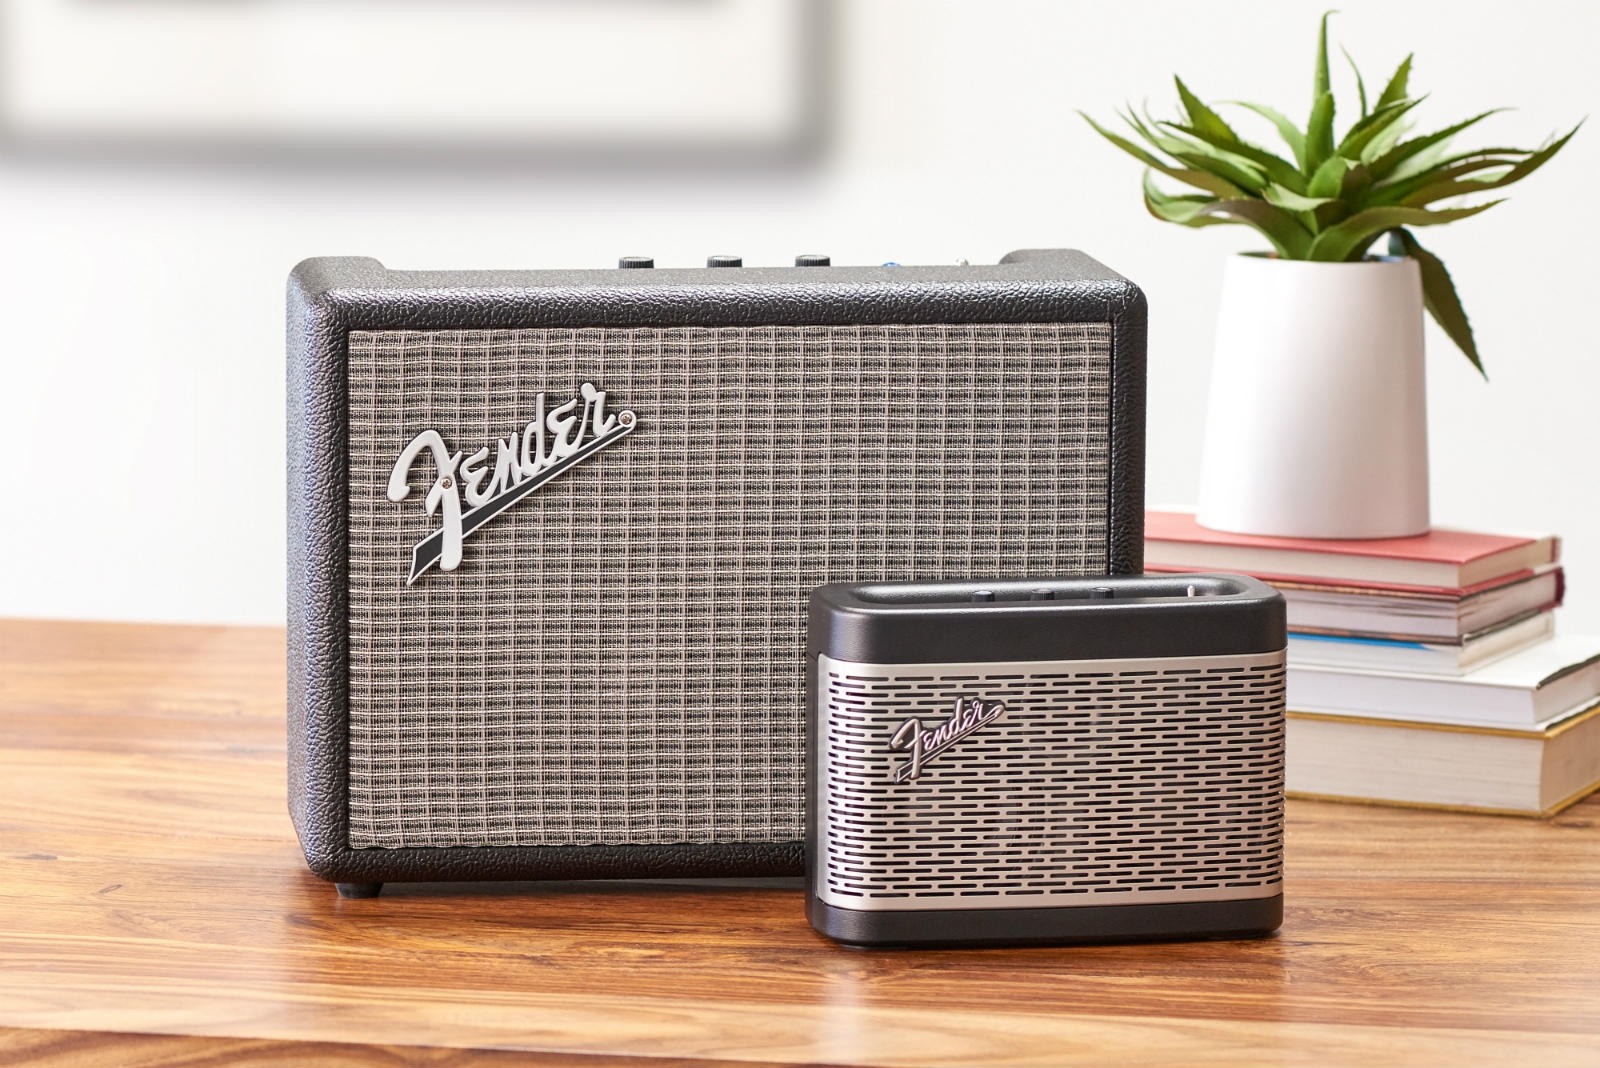 Fender's Bluetooth speakers look just as you'd imagine